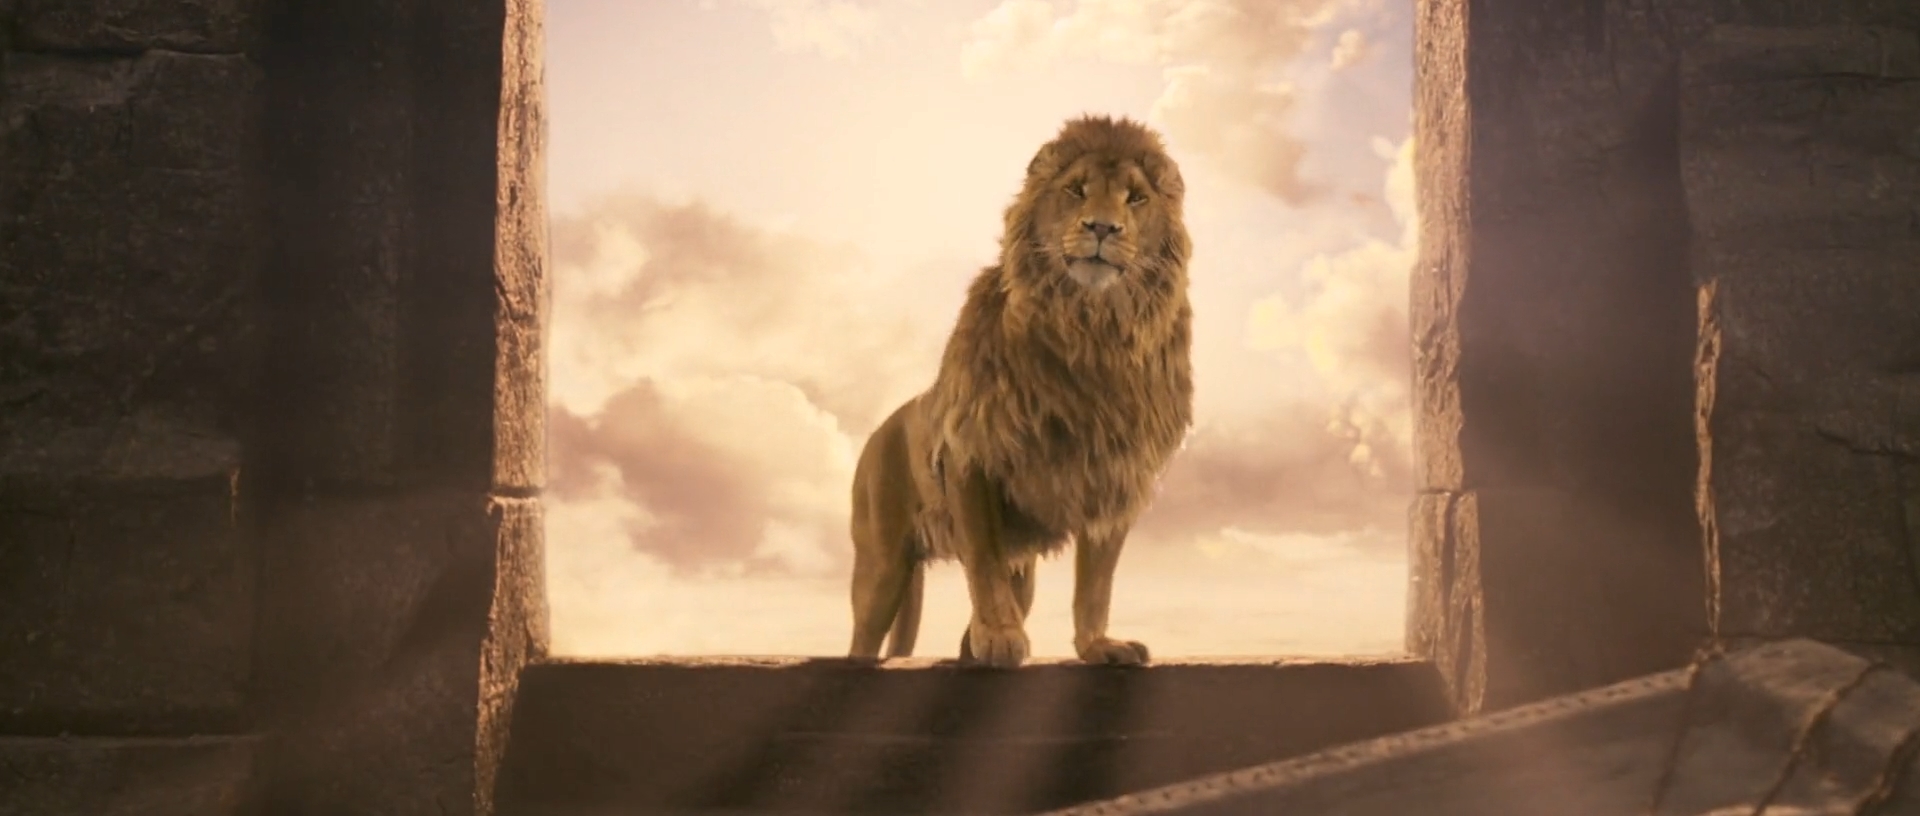 Aslan the Great Lion of Narnia by MCsaurus on DeviantArt